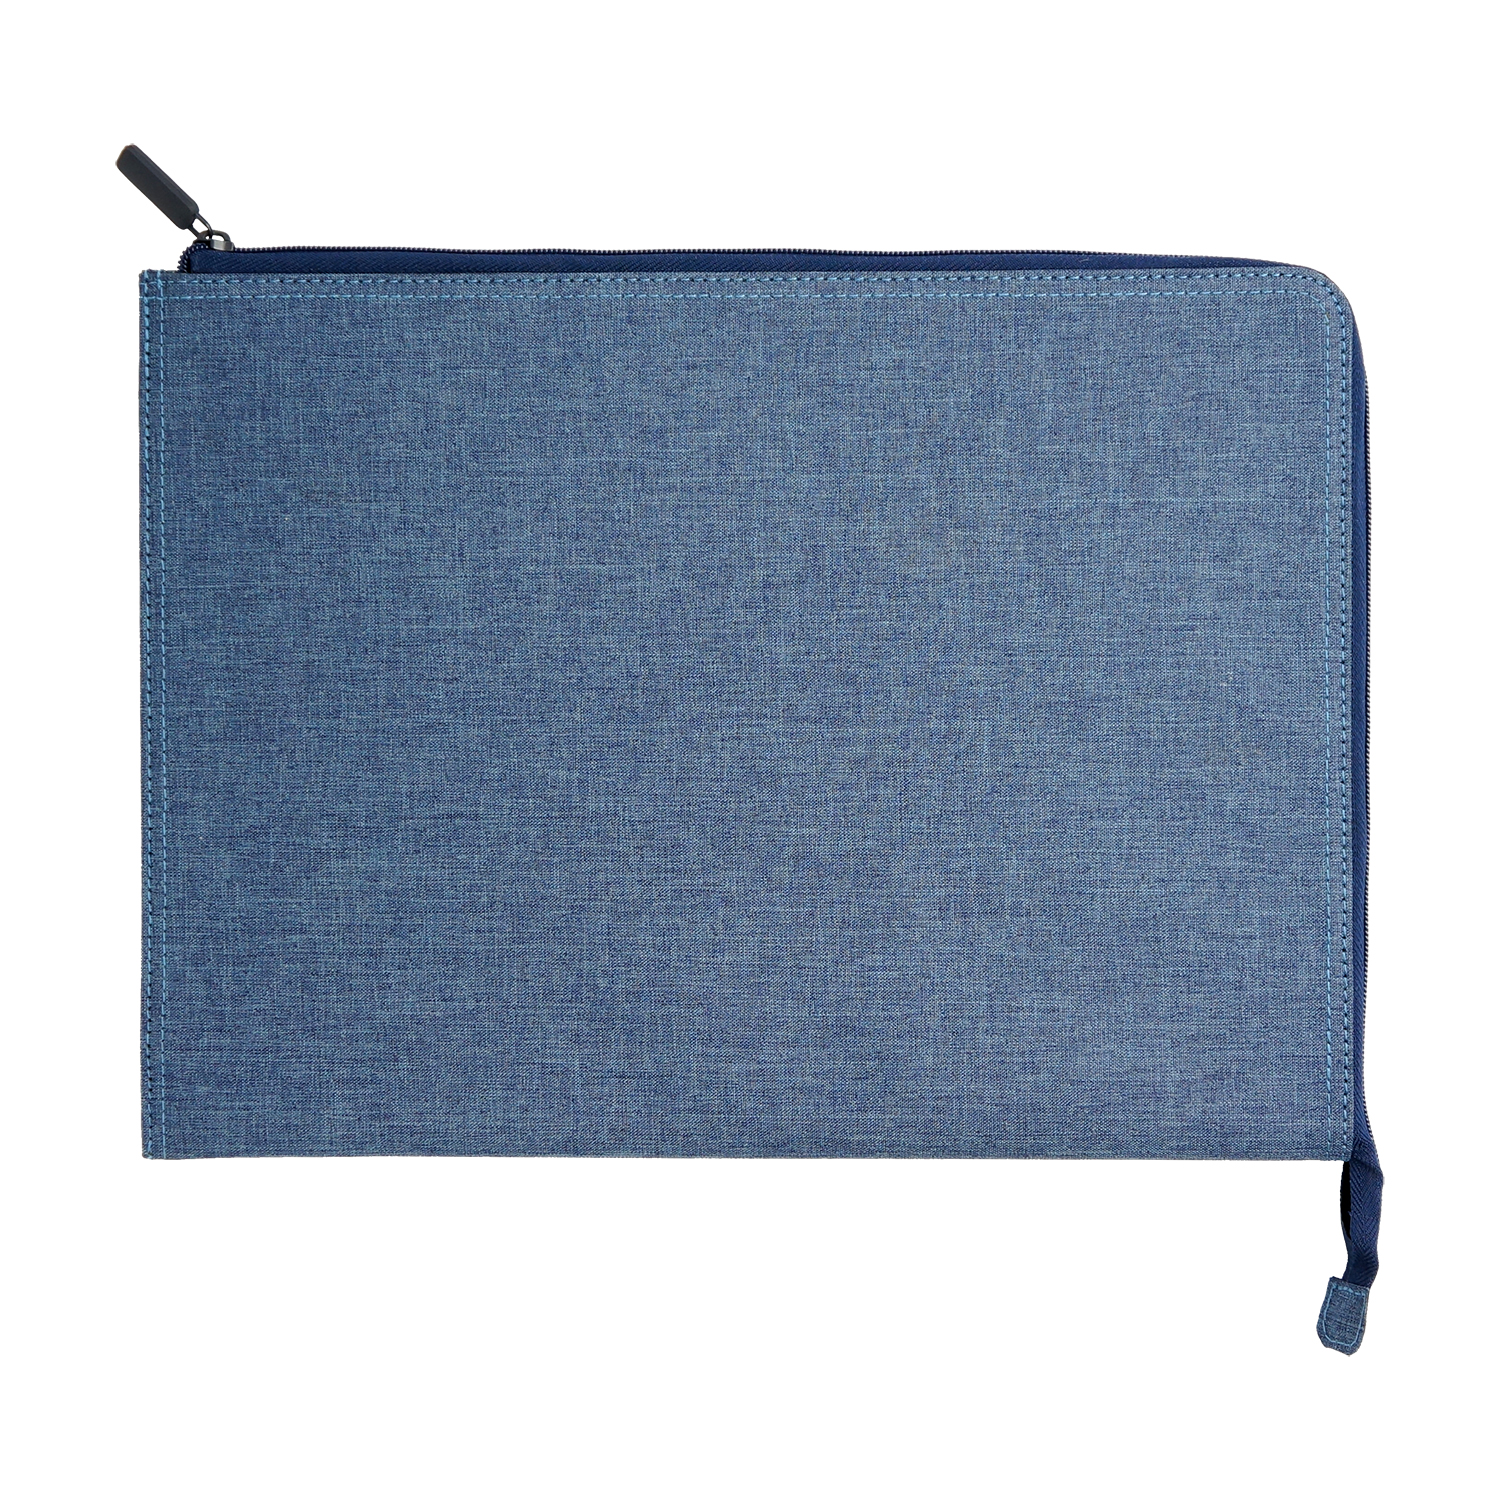 OF-1718 Tablet Sleeves Blue